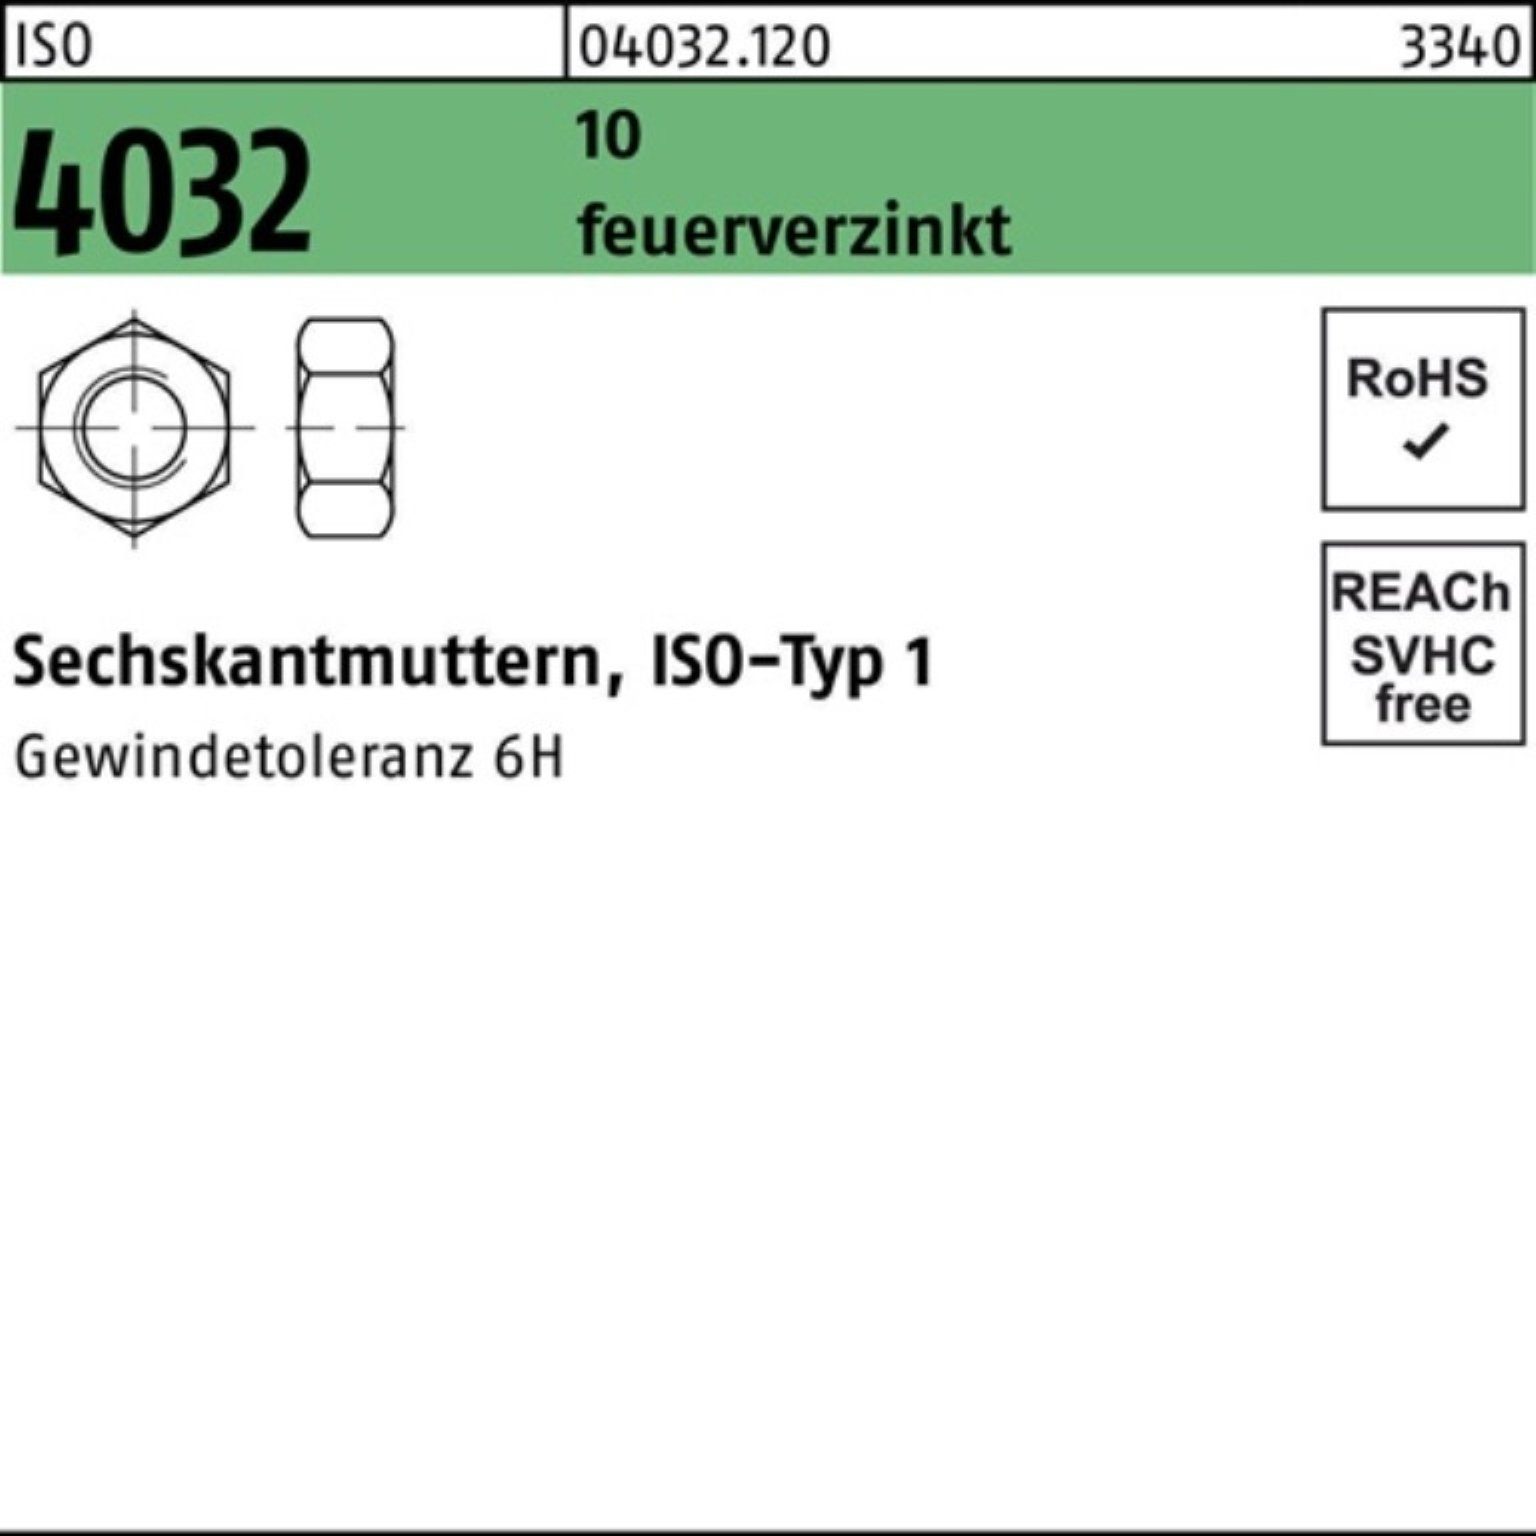 100 feuerverz. Stück 4032 4 M12 10 ISO ISO 100er Pack Bufab Sechskantmutter Muttern